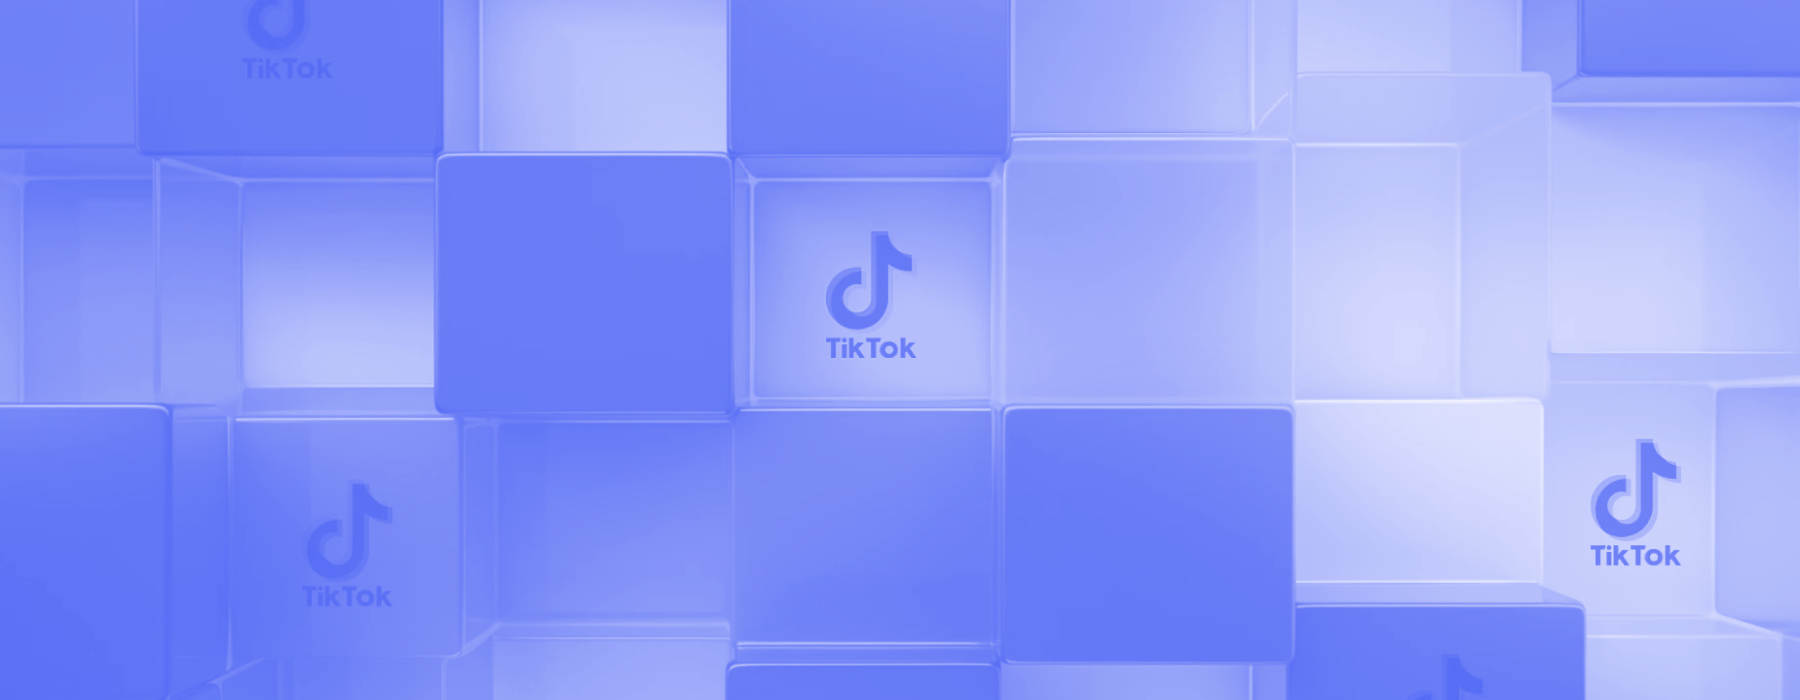 How to Find Someone on TikTok